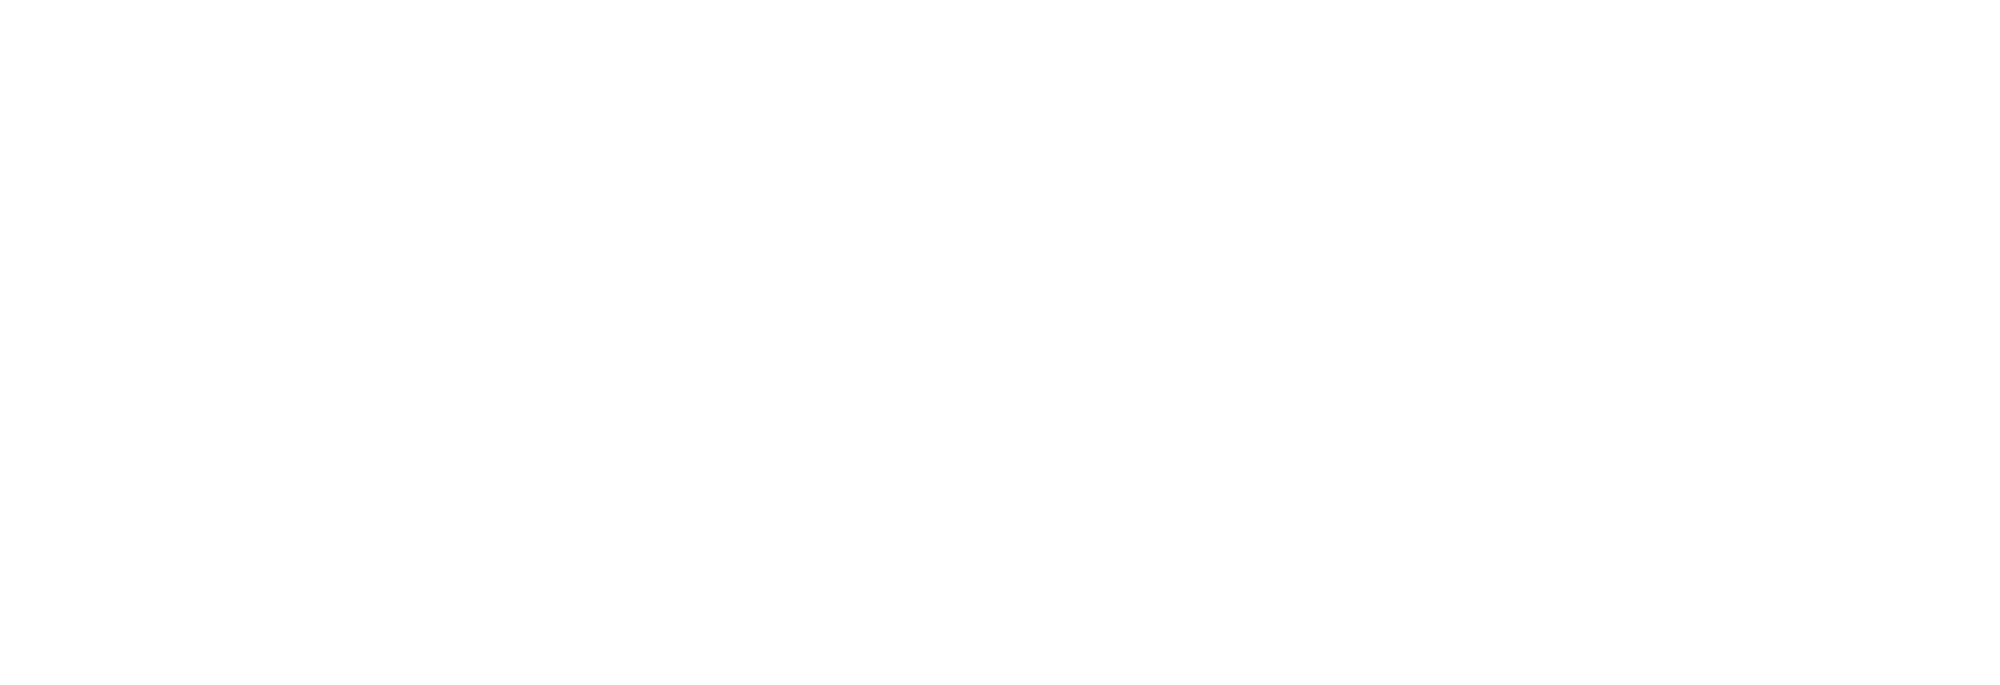 Uc Berkeley Logo Transparent Png Stickpng - vrogue.co